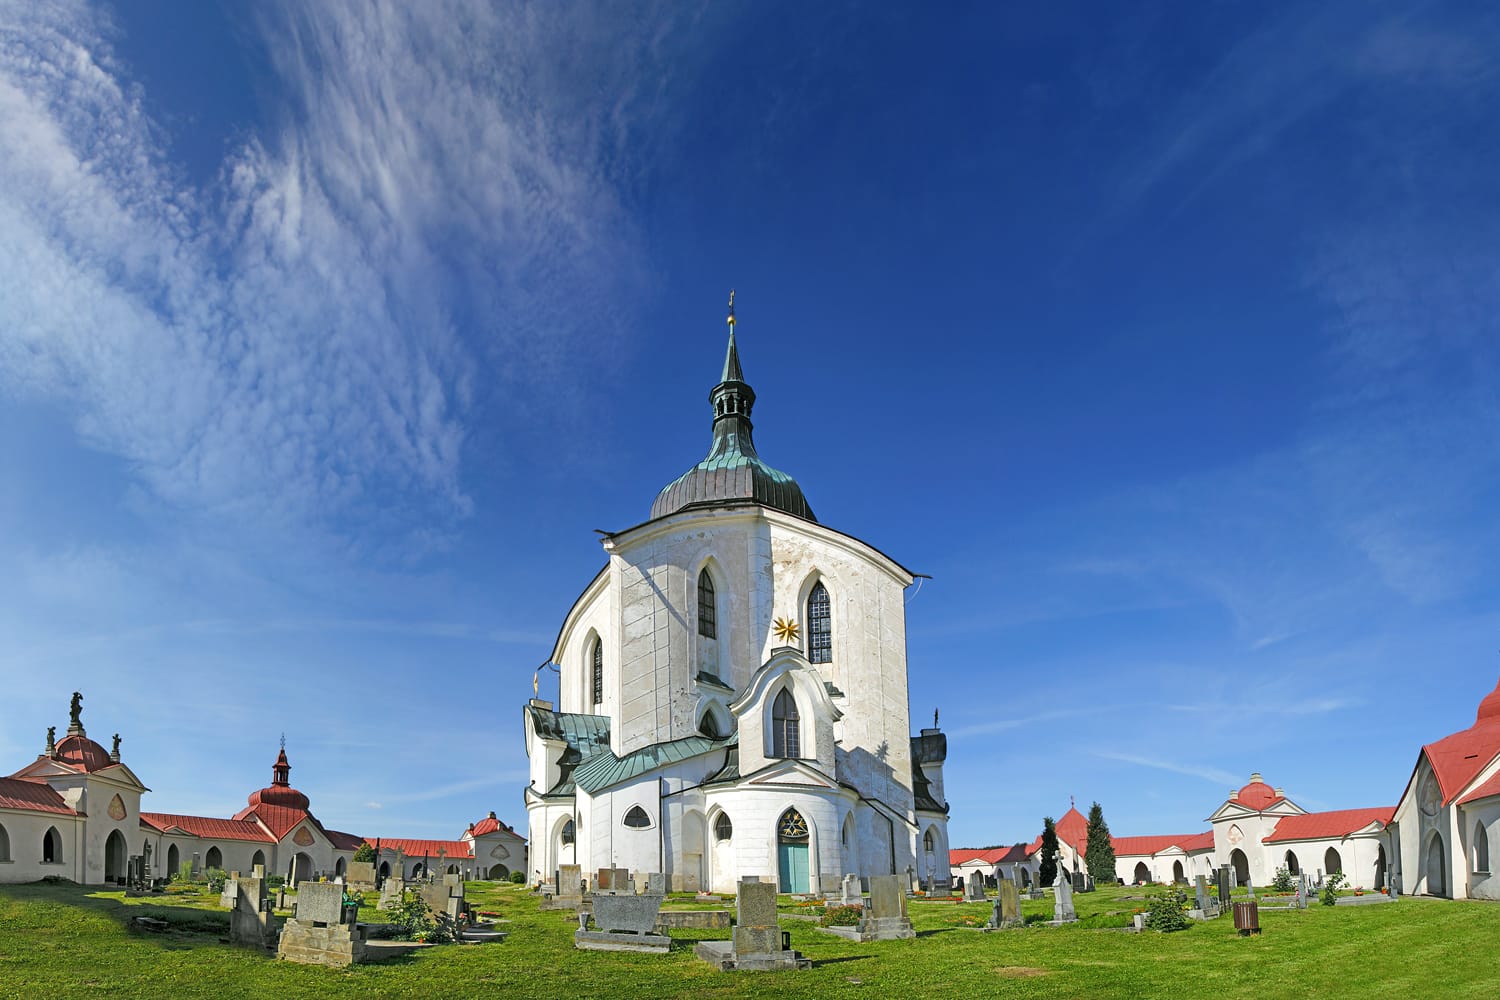 The Pilgrim Church of St. John of Nepomuk on Zelena Hora (Green Mountain) near Zdar nad Sazavou, Czech Republic, World Heritage Site by UNESCO